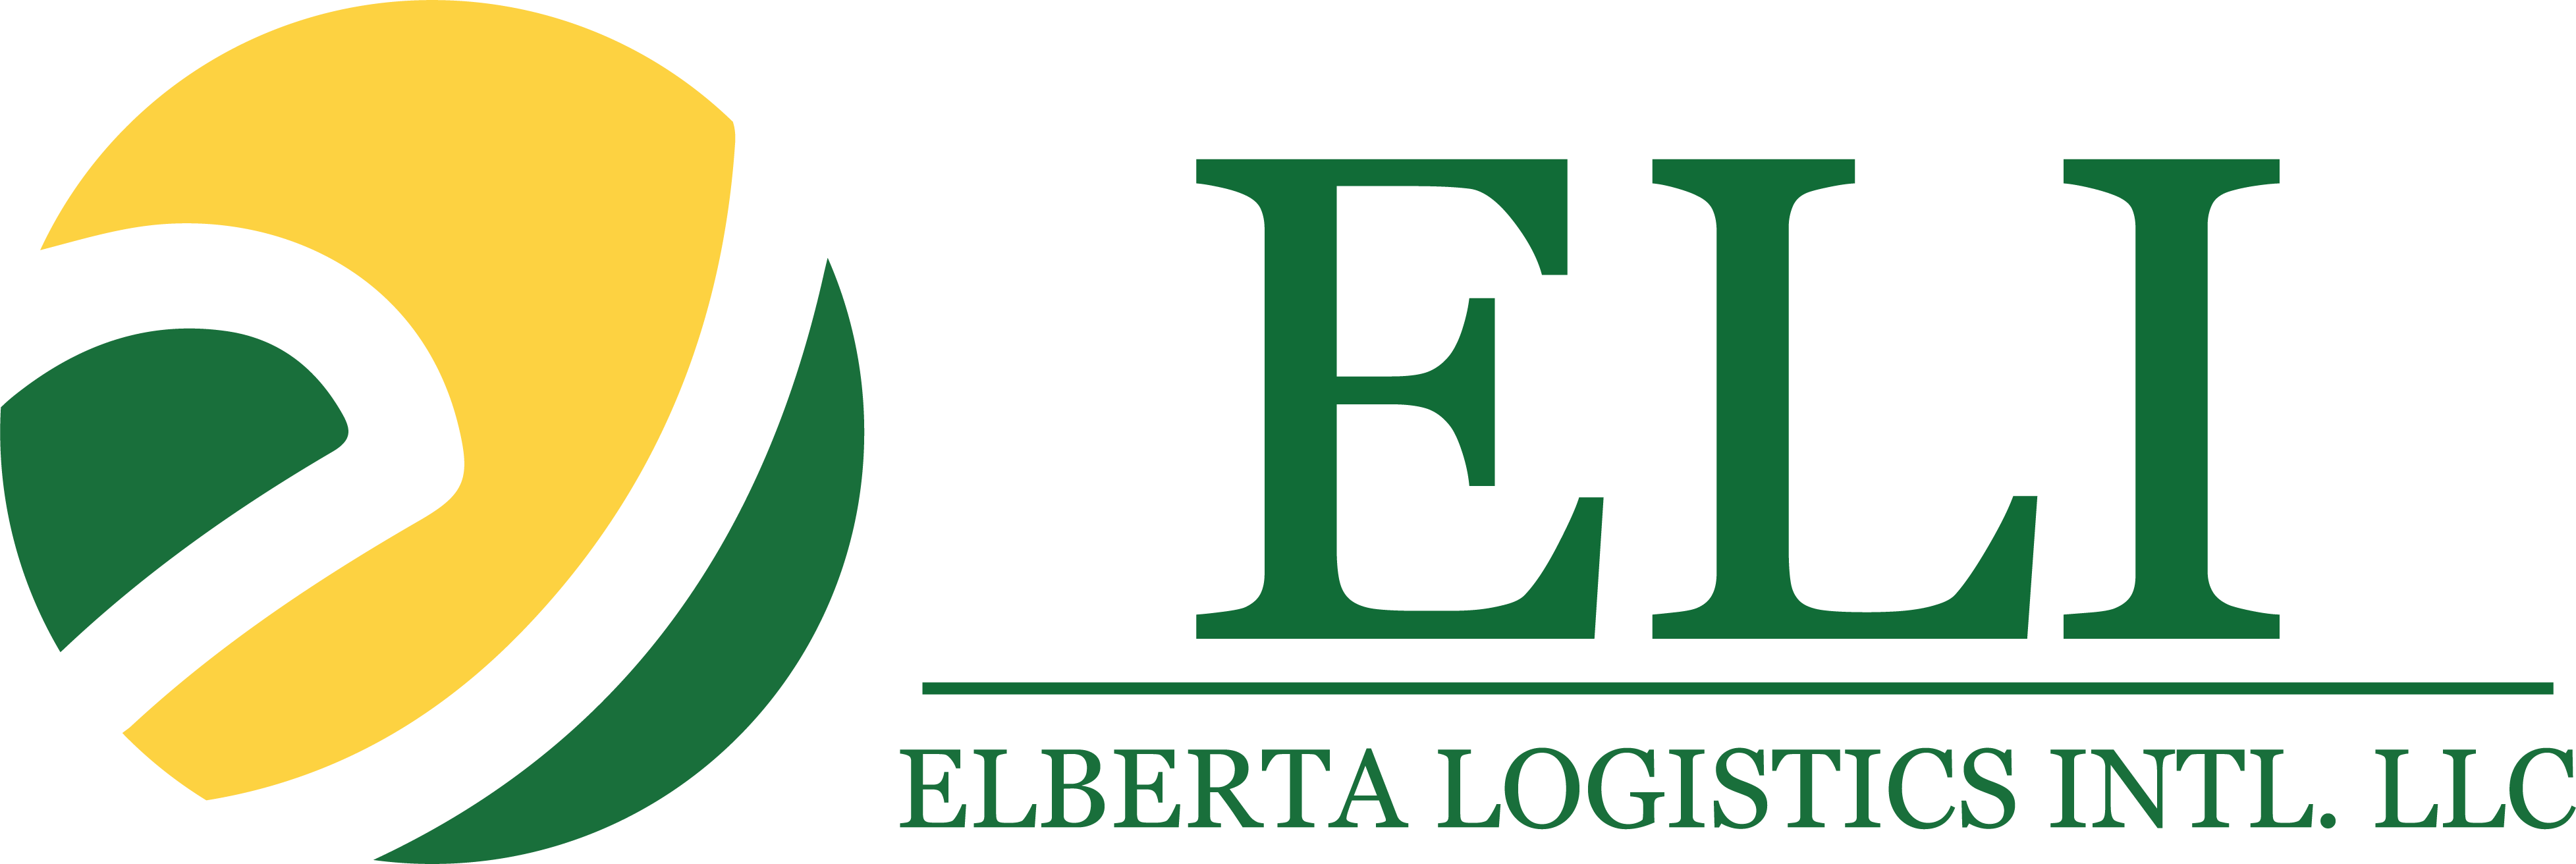 Elberta Logistics International LLC